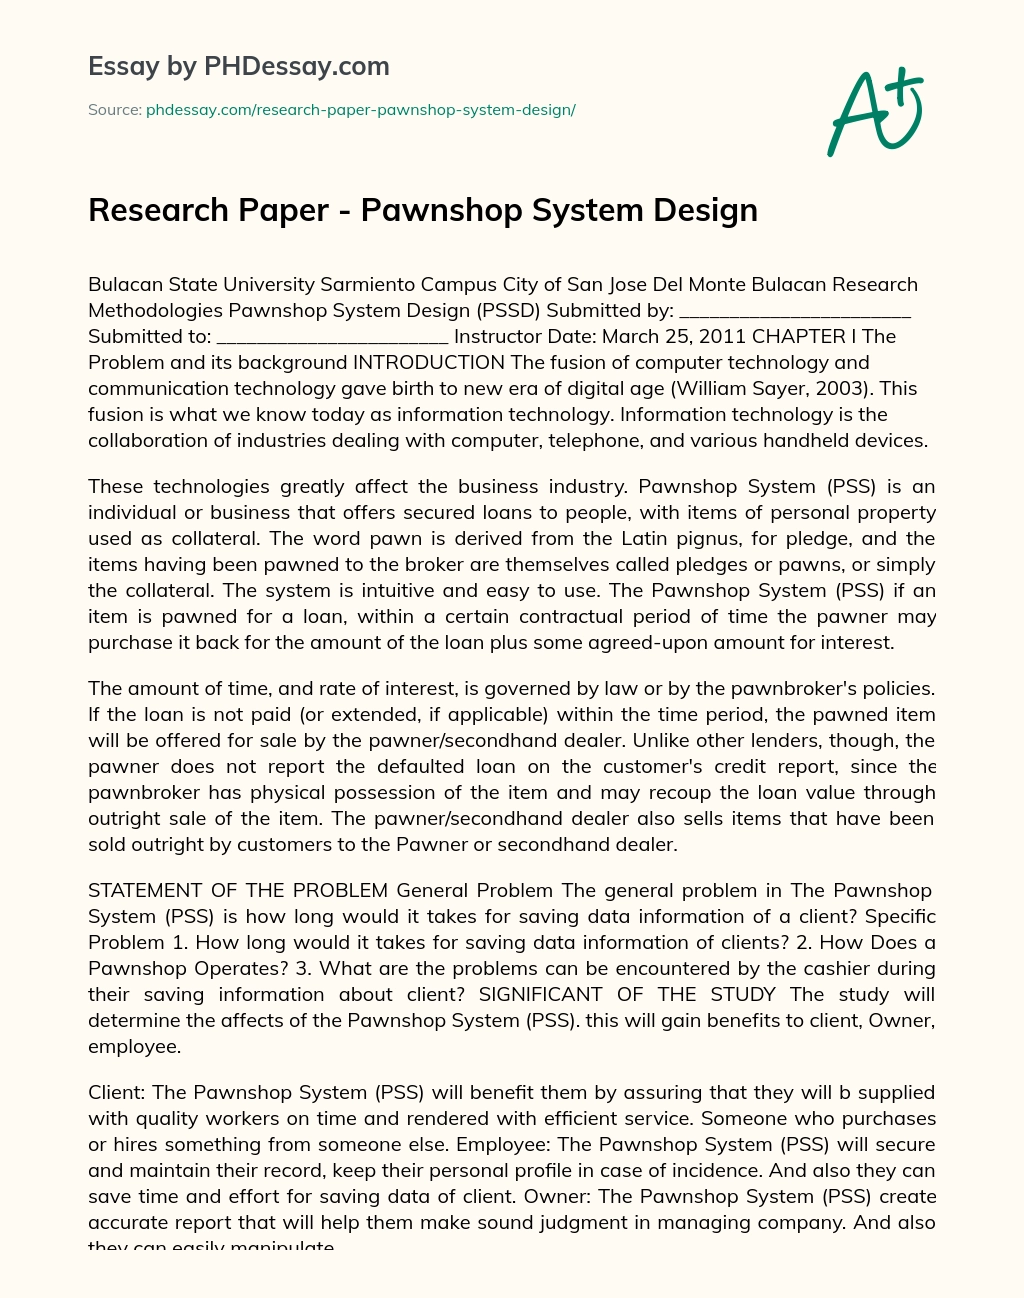 Research Paper – Pawnshop System Design essay